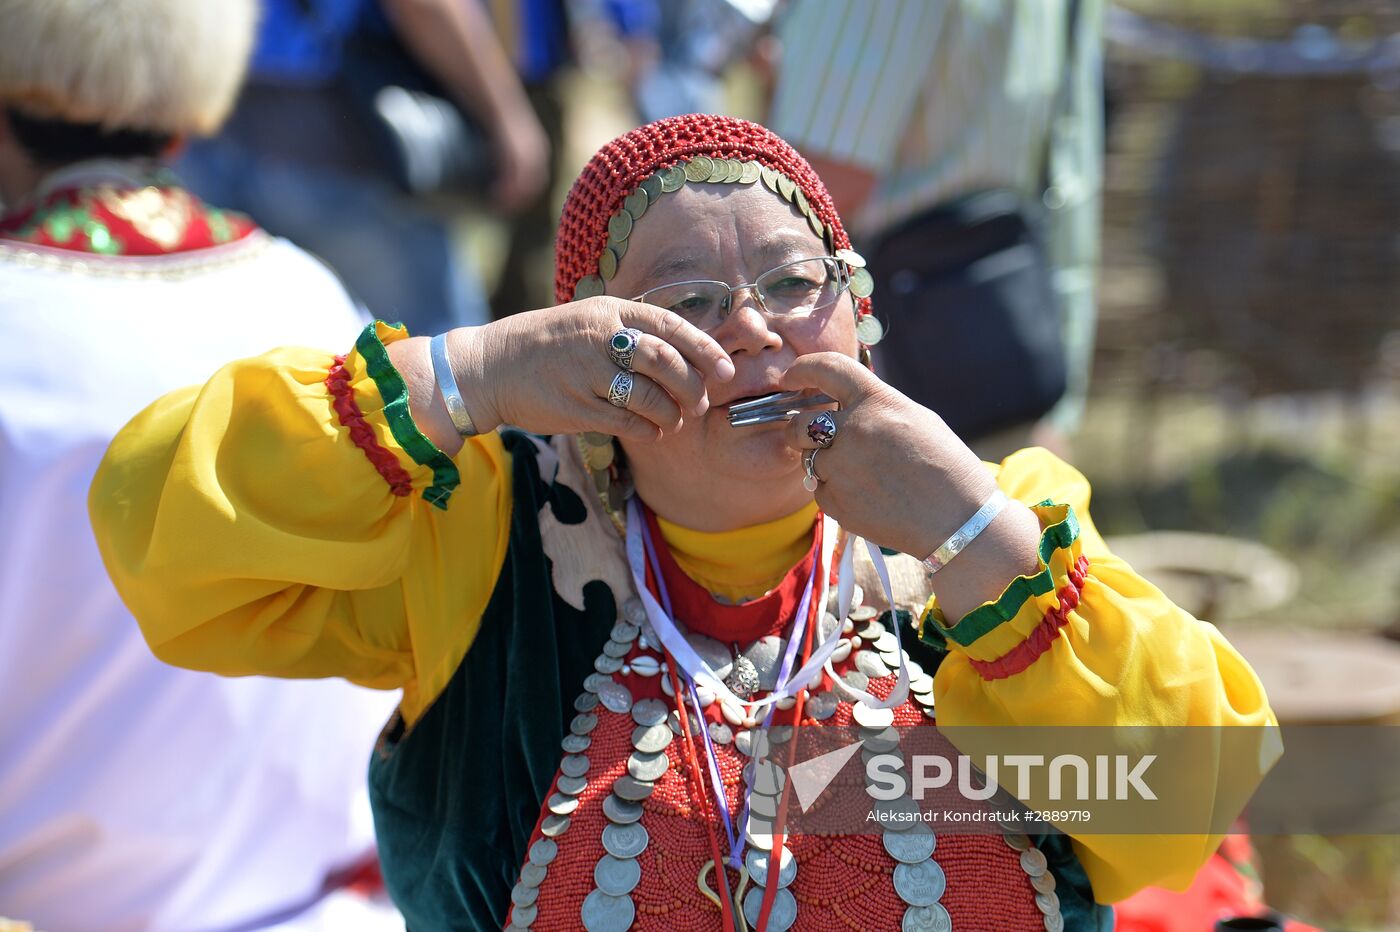 Sabantuy festival celebrated in Chelyabinsk Region